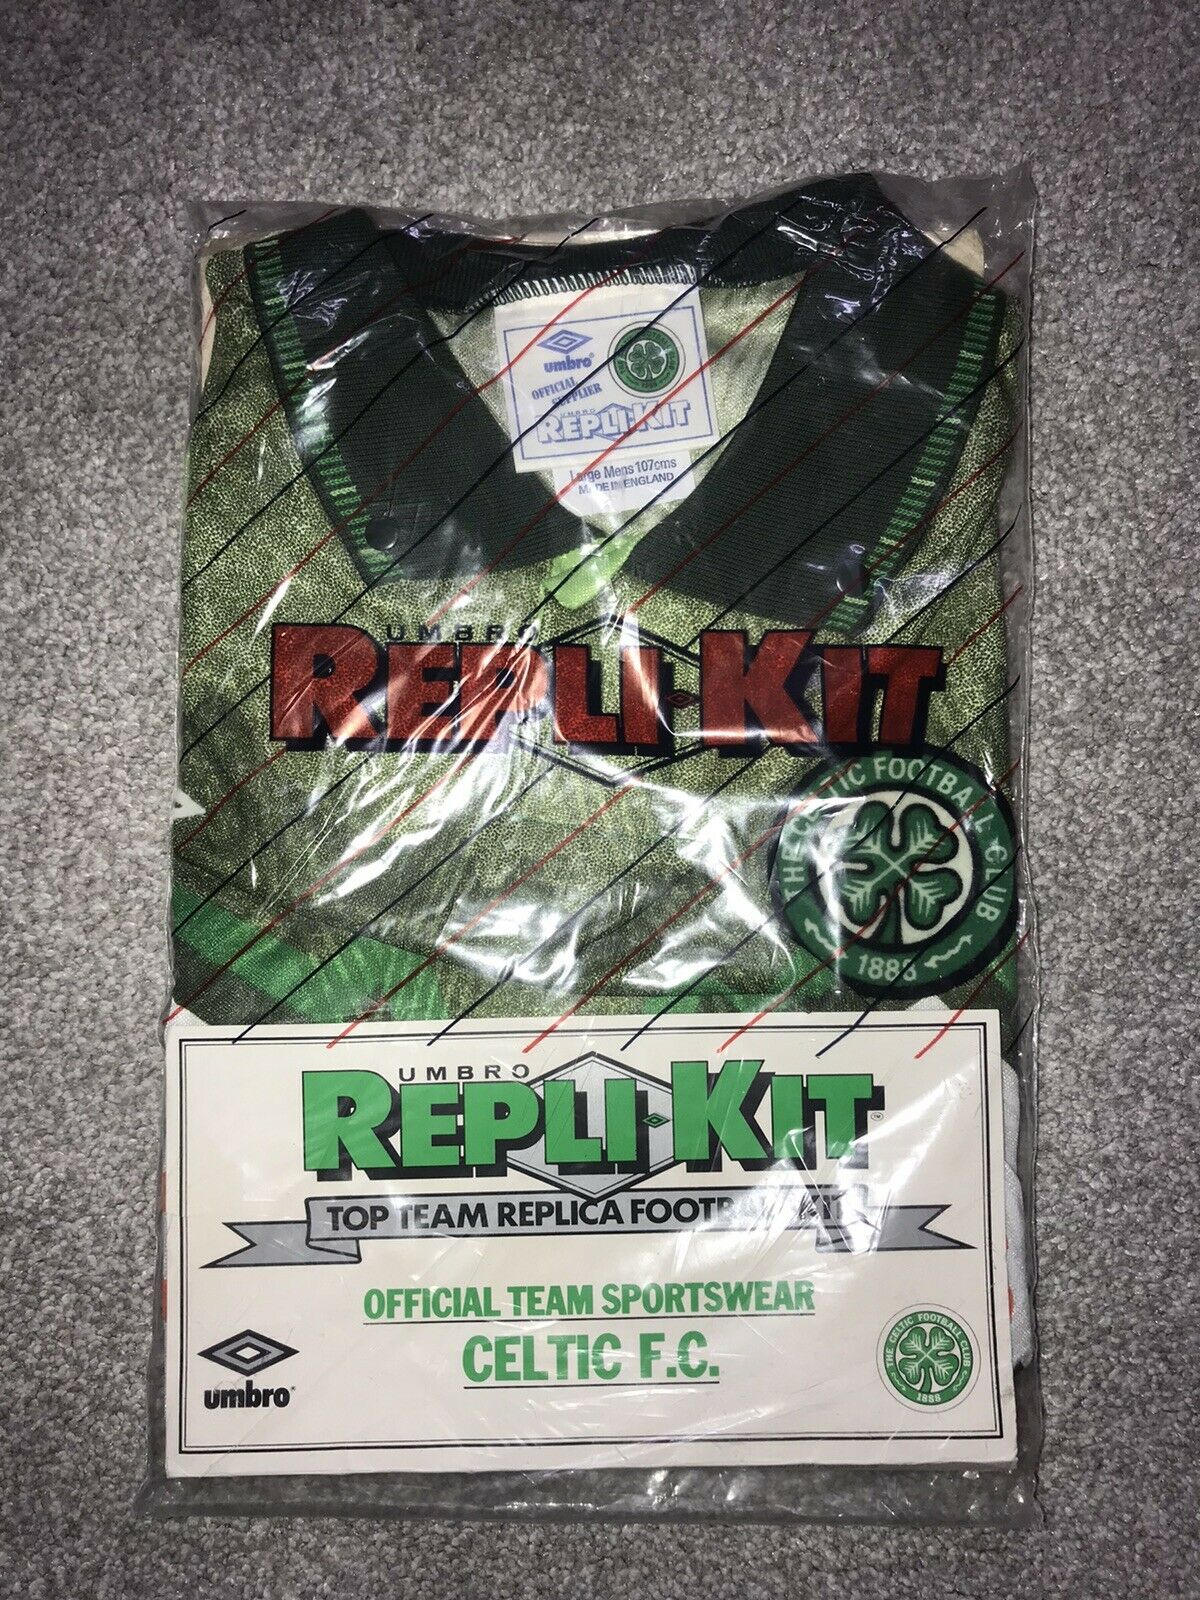 Celtic: Rare football shirt stolen from National Football Museum